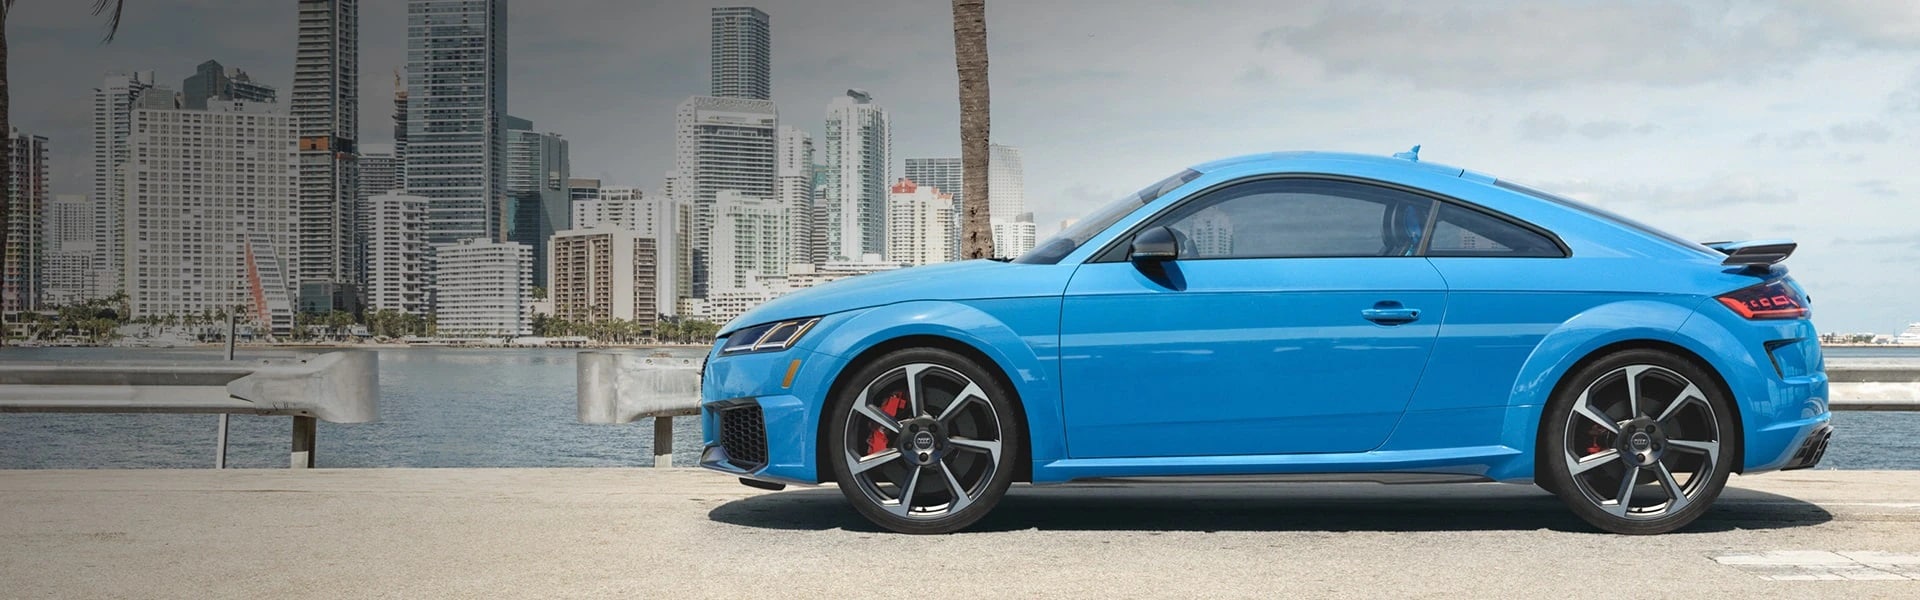 Audi Purchasing & Leasing Options